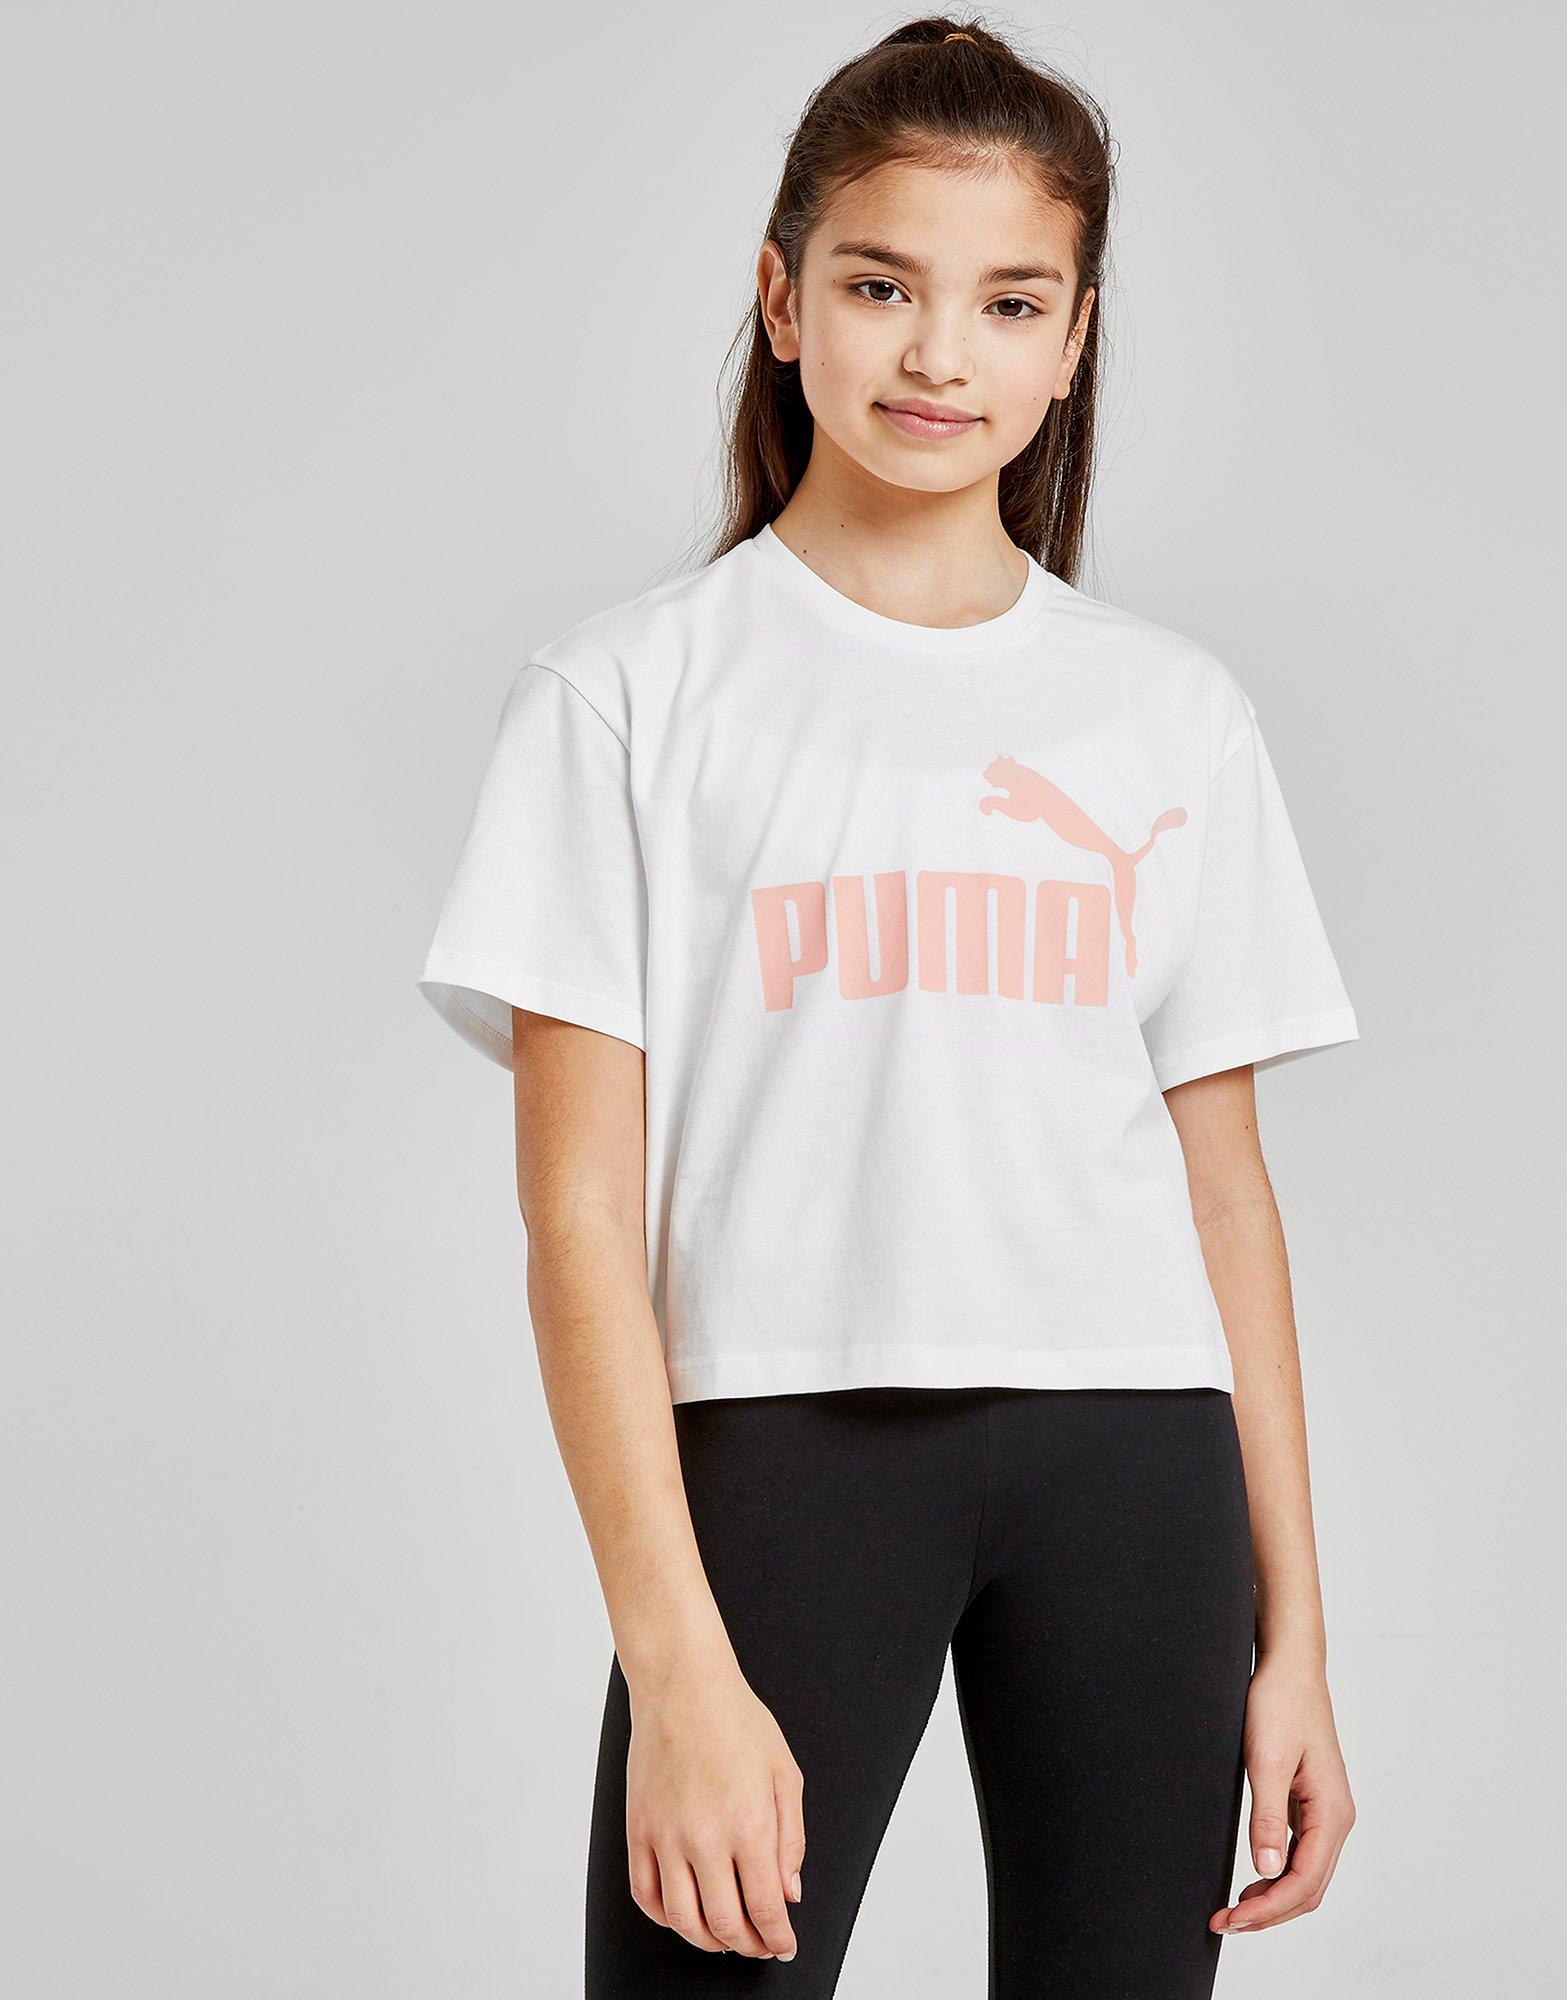 New Puma Girls Core Crop T Shirt Ebay